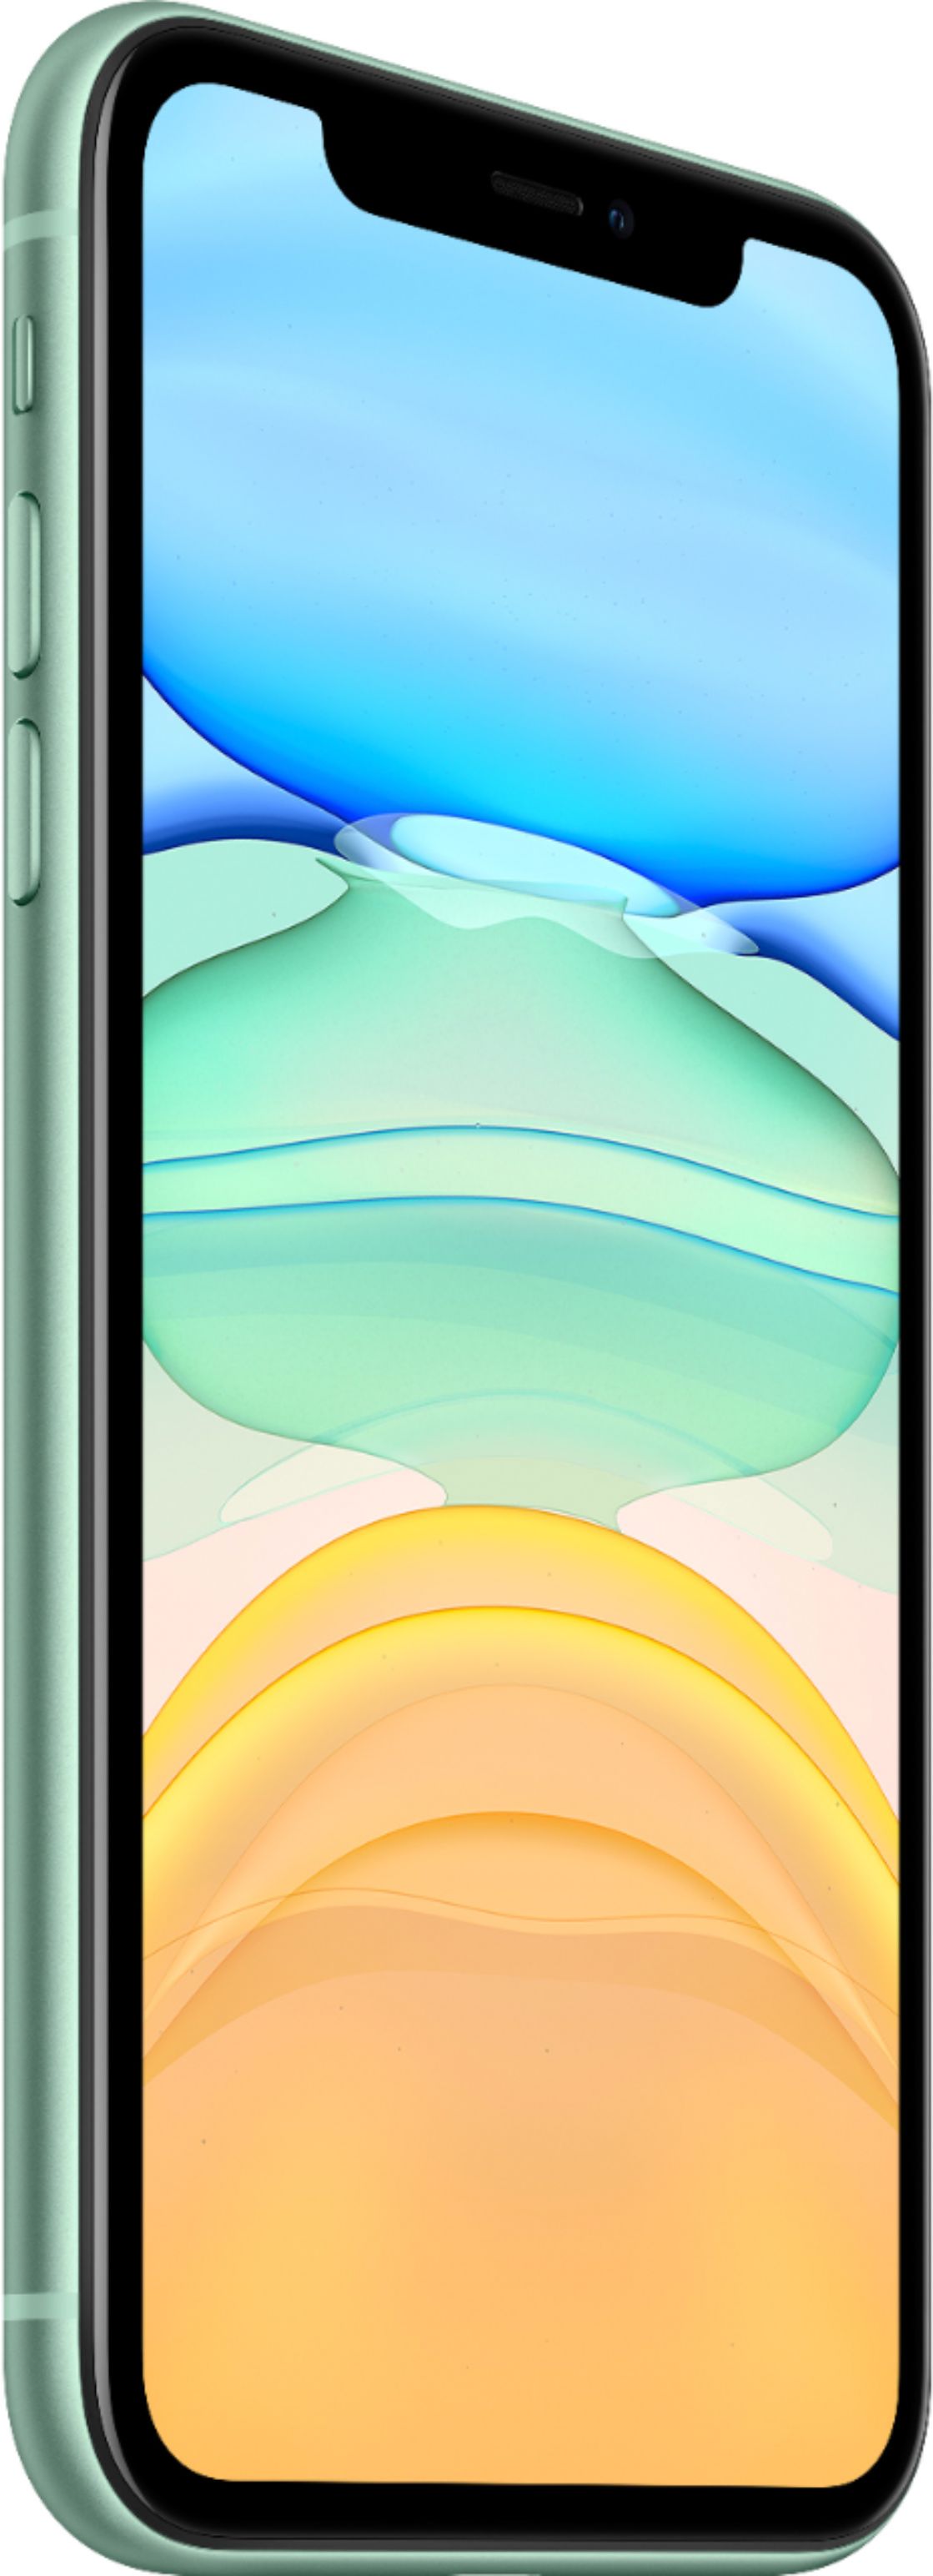 Best Buy Apple Iphone 11 128gb Green Verizon Mwlk2ll A